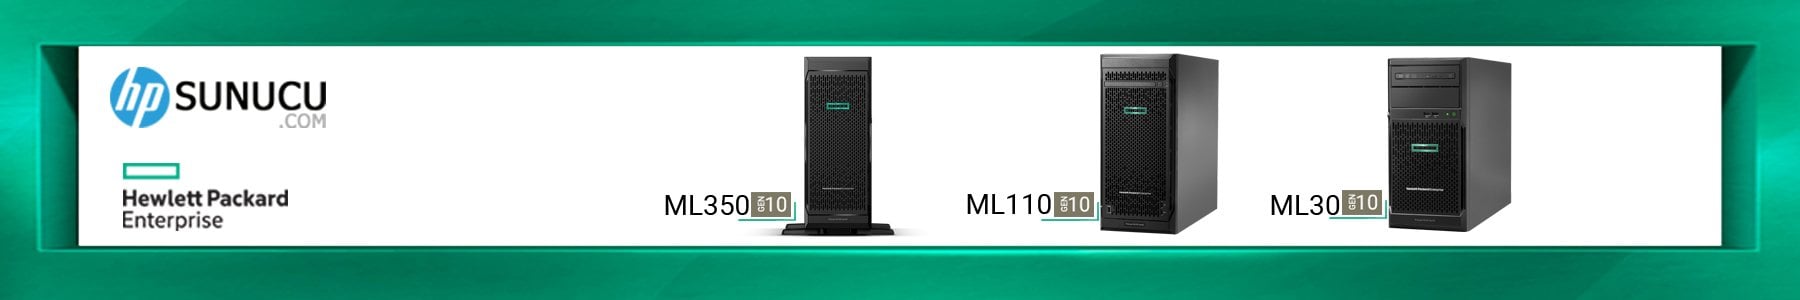 HPE ML110 Gen10 Server